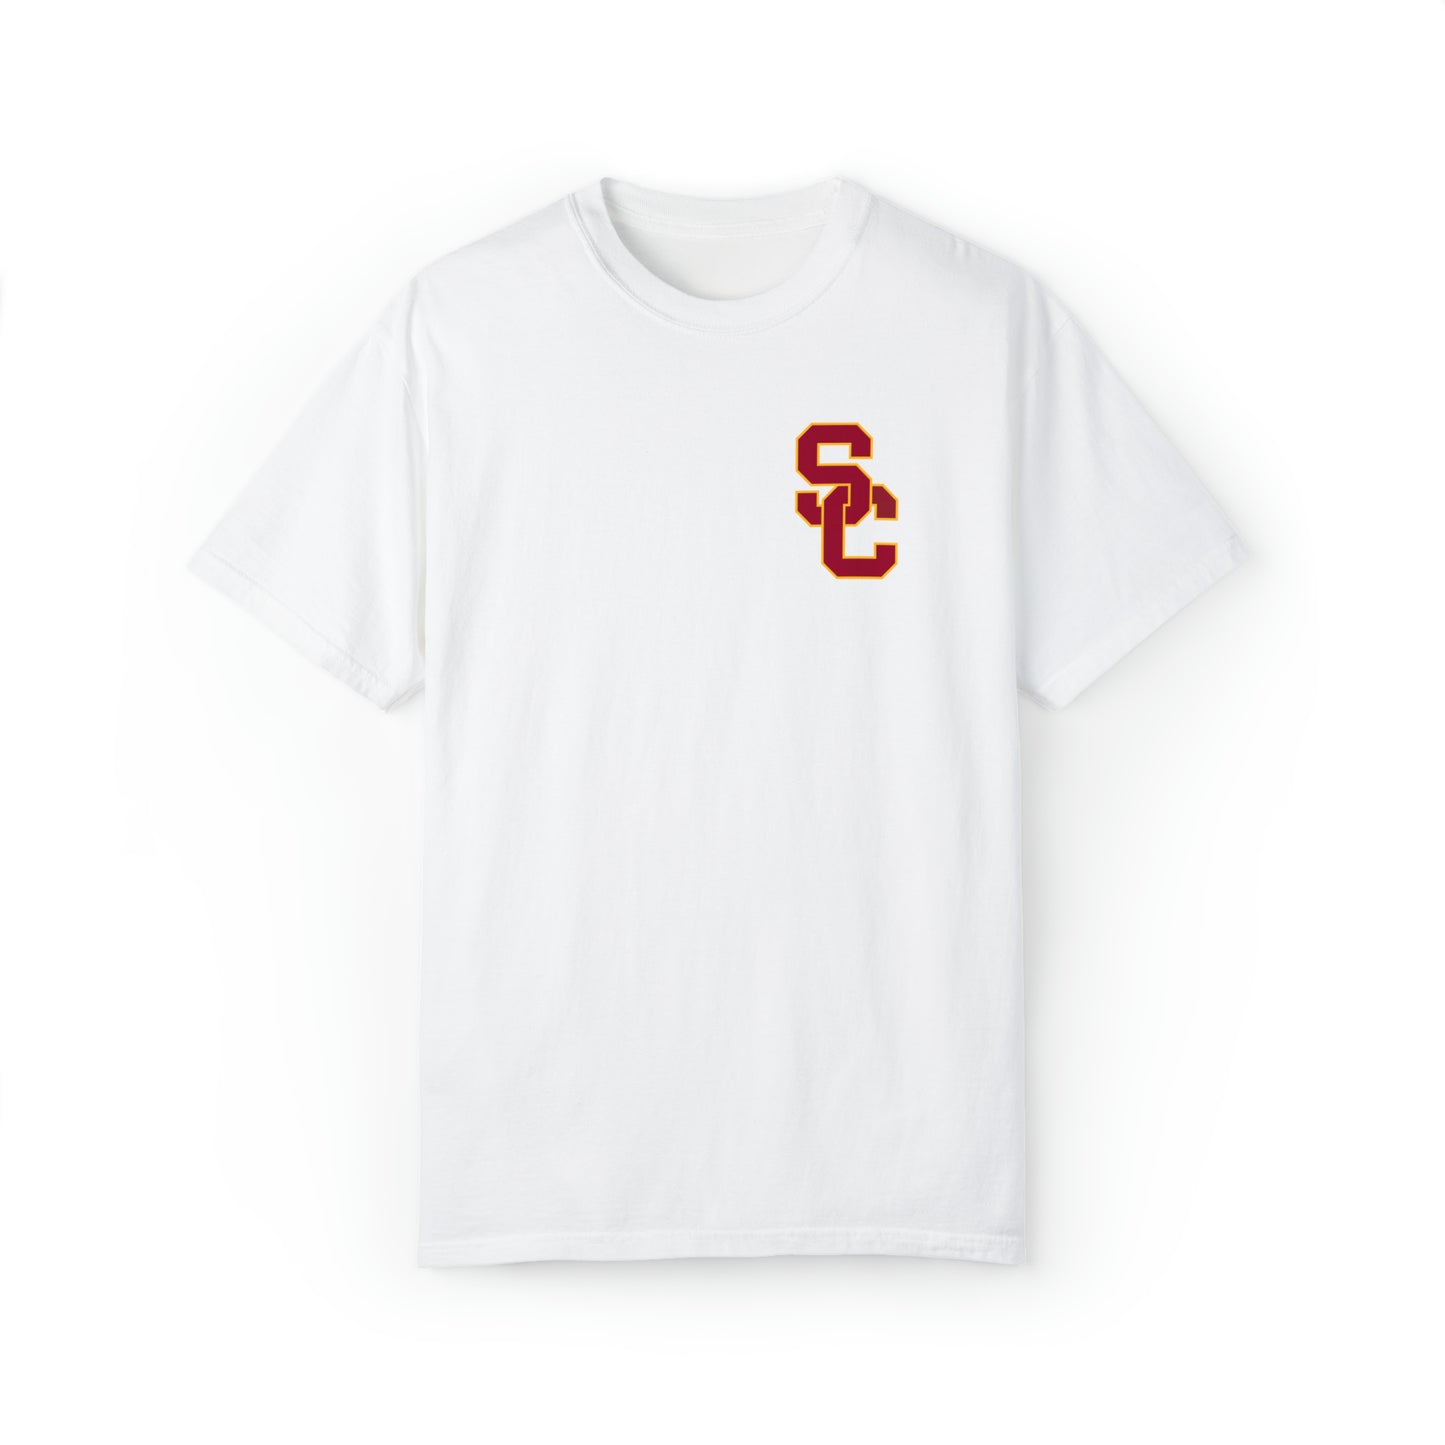 USC Trojans Game Day shirt